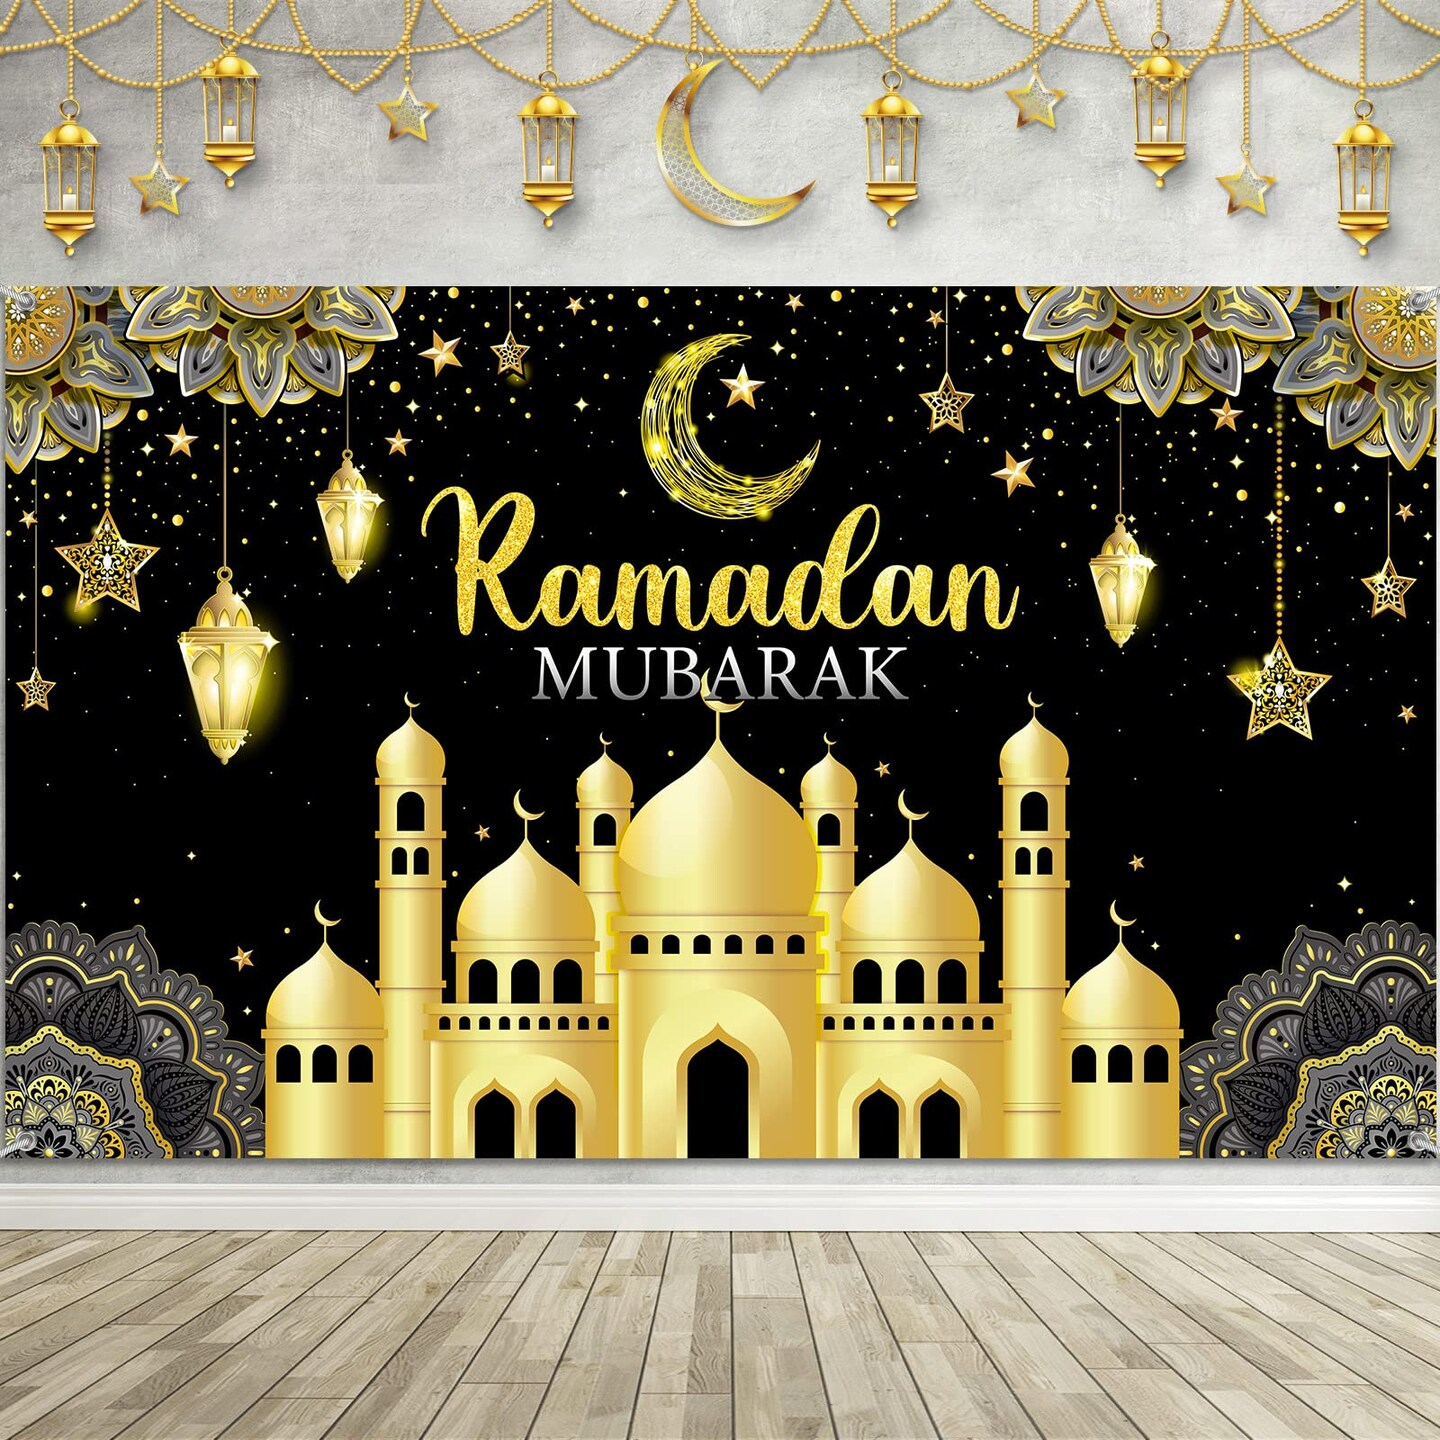 Ramadan Mubarak Decorations Backdrop Banner Muslim Kareem Background Eid Sign Photo Booth for Home Al Fitr Party Supplies (Black)